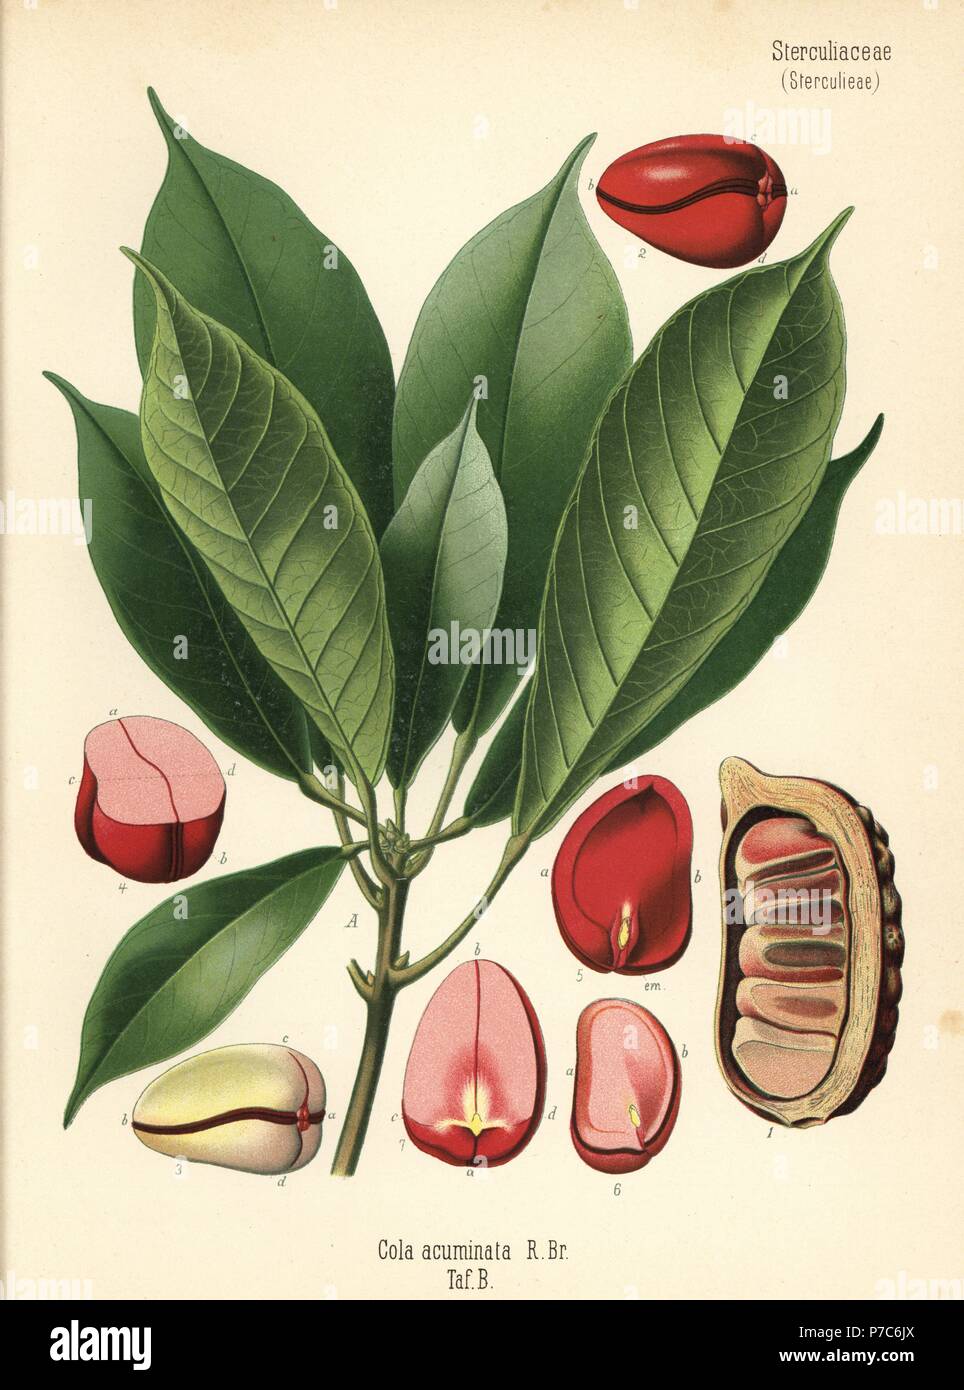 Kola nut or kola tree, Cola acuminata. Chromolithograph after a botanical illustration from Hermann Adolph Koehler's Medicinal Plants, edited by Gustav Pabst, Koehler, Germany, 1887. Stock Photo